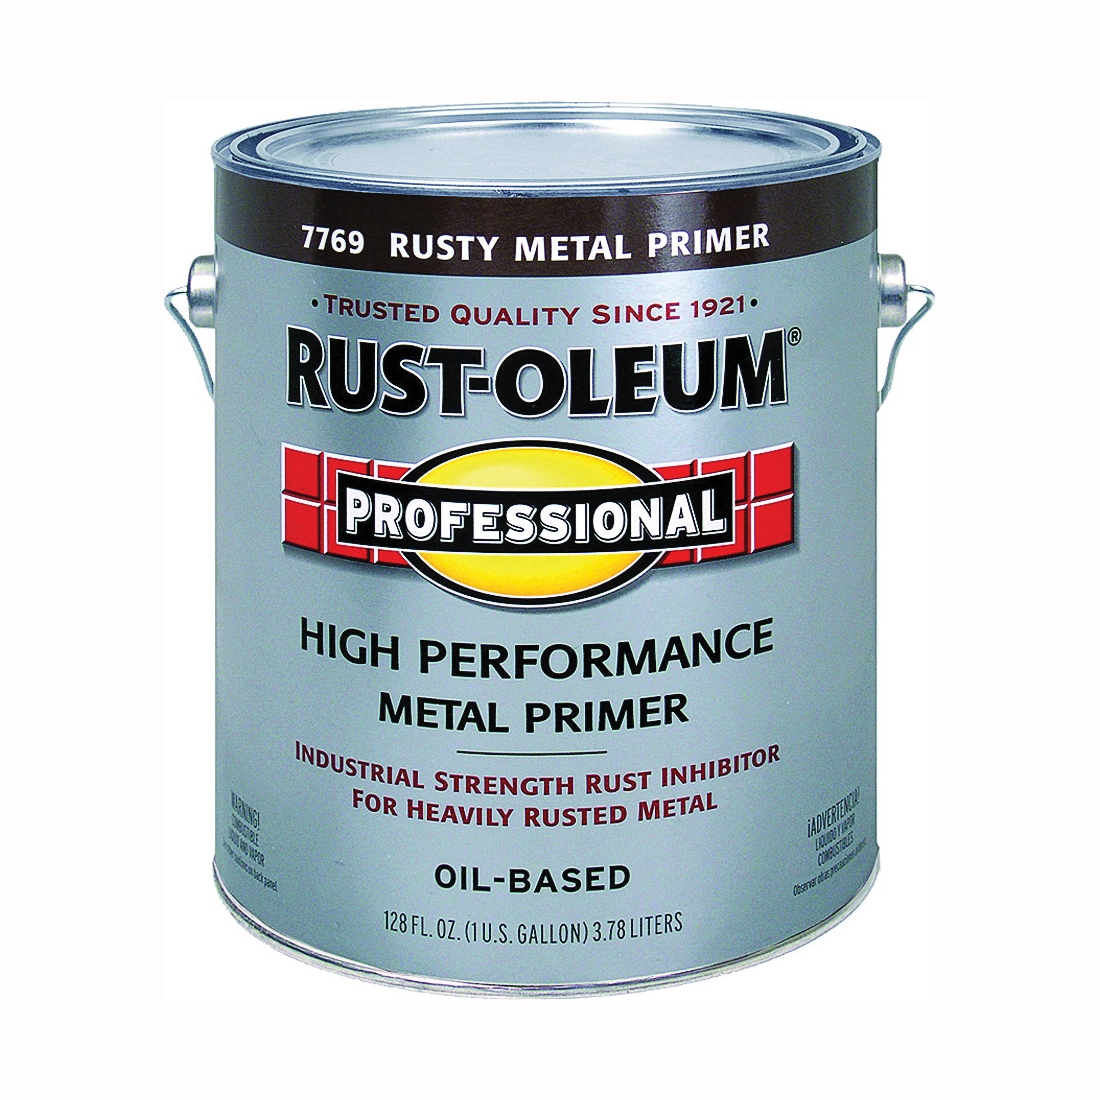 RUST-OLEUM PROFESSIONAL 7769402 Rusty Metal Primer, Flat, Flat Rusty Metal Primer, 1 gal - 1